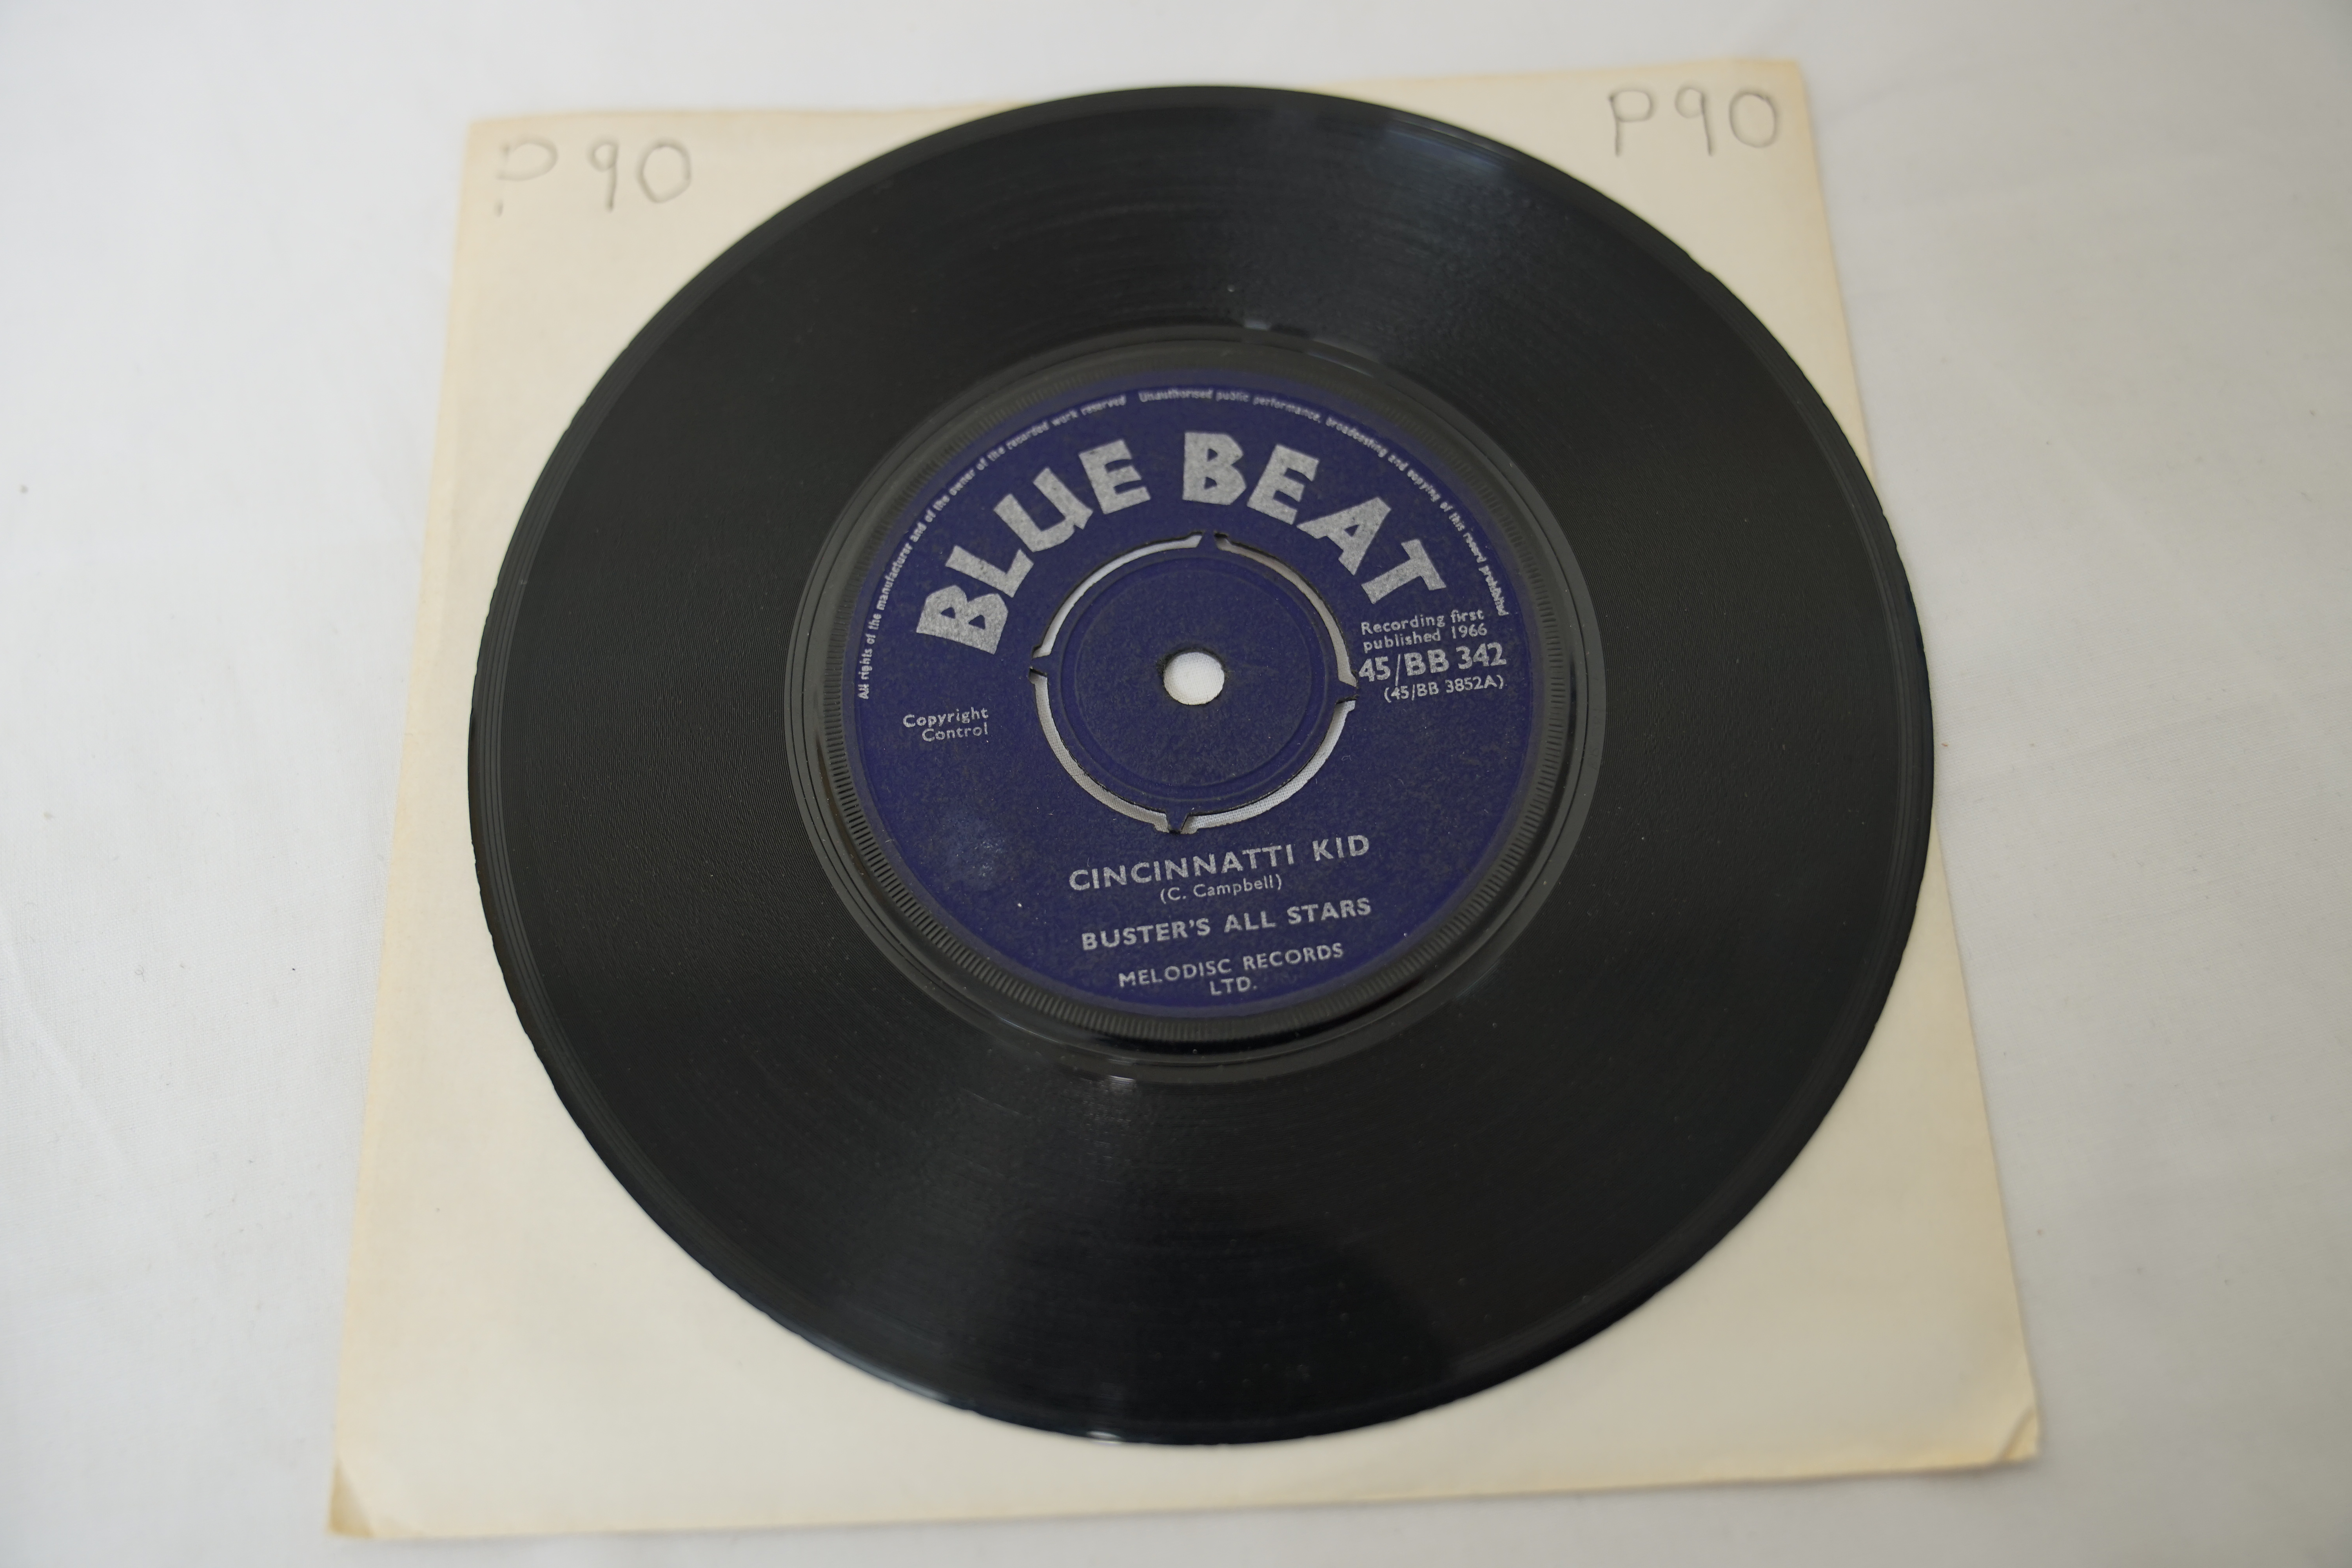 Vinyl - 6 UK Blue Beat Records / Prince Buster 7" singles, Reggae / Ska / Skinhead Reggae, - Image 4 of 25